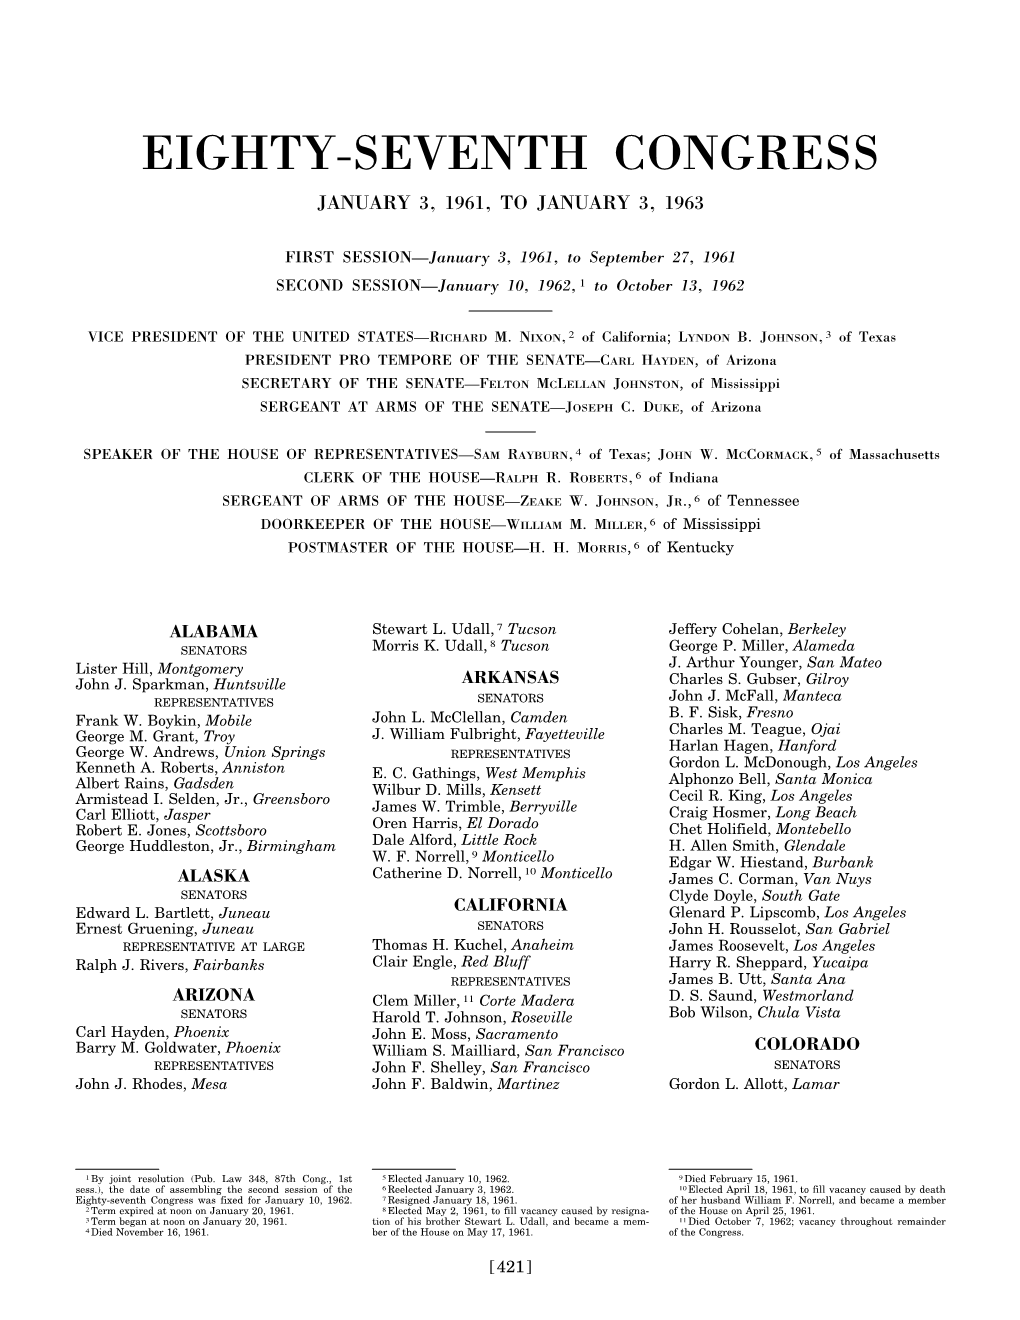 Eighty-Seventh Congress January 3, 1961, to January 3, 1963